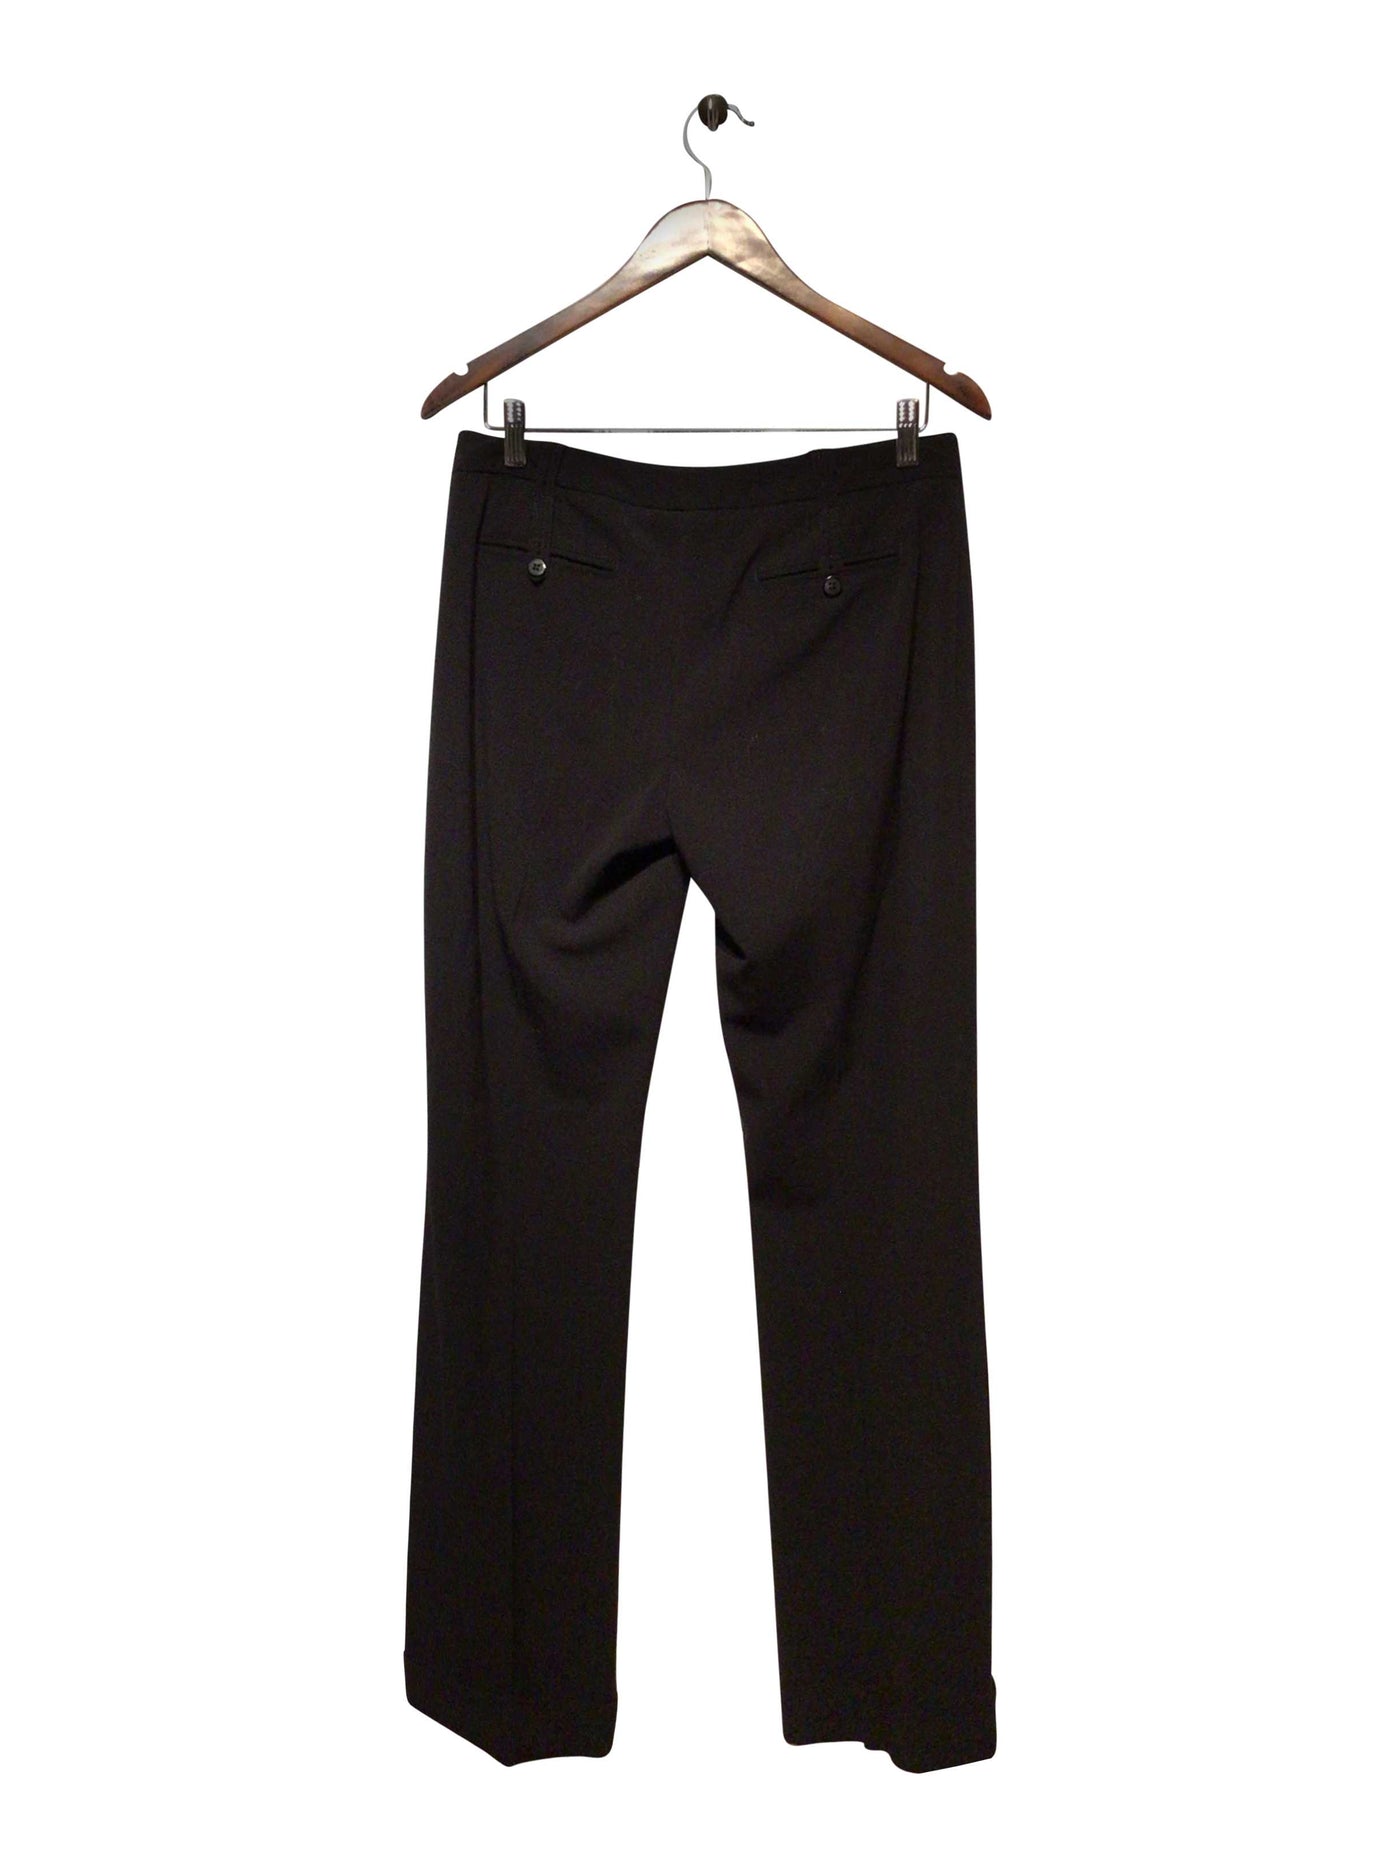 RICKI'S Regular fit Pant in Black  -  6  19.90 Koop